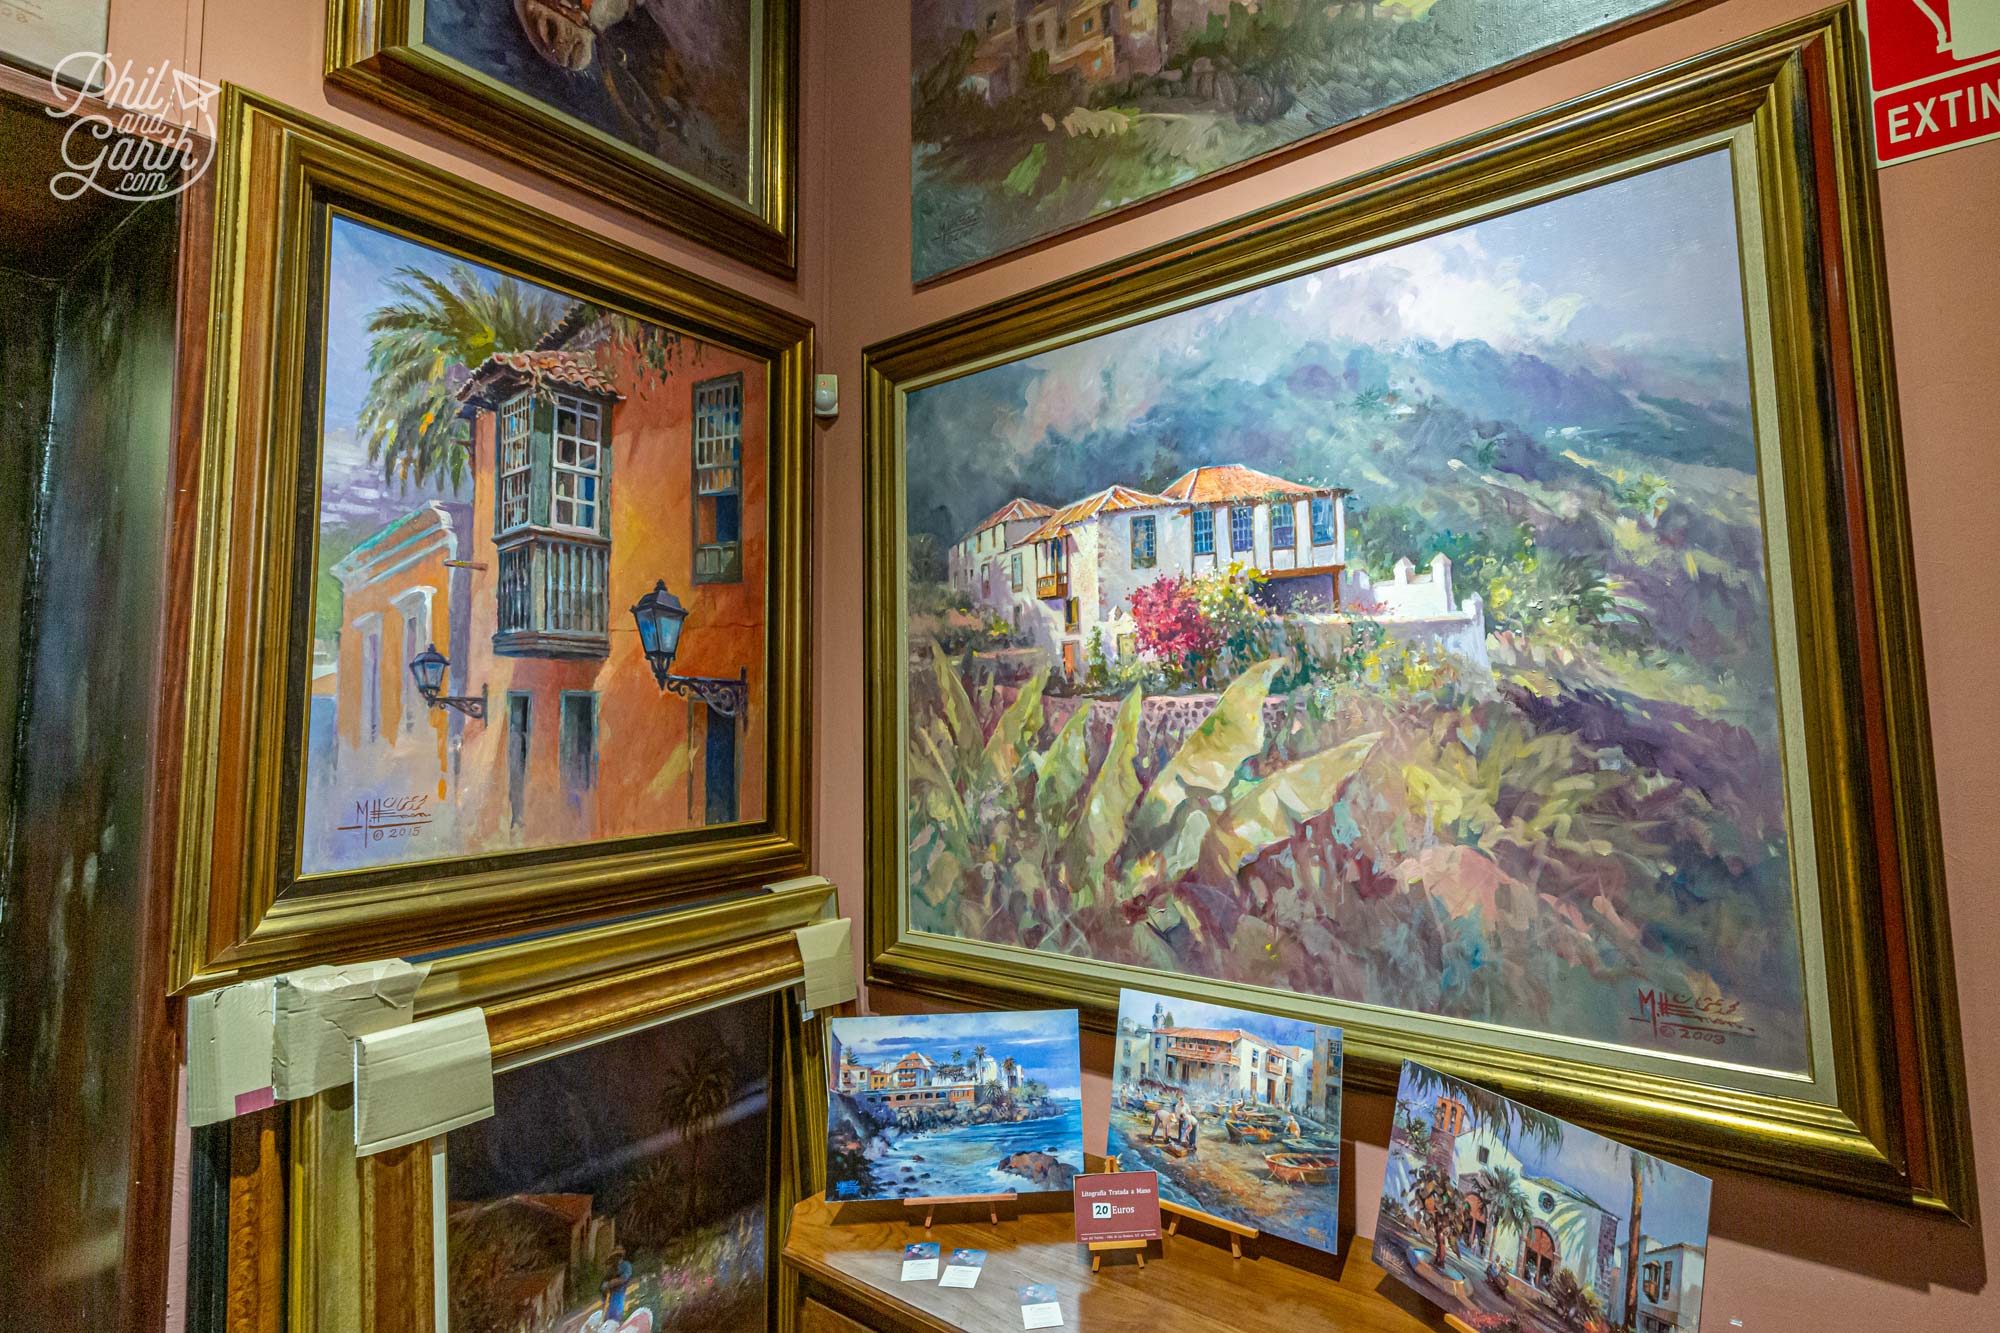 Casa Eladia Machado Tenerife showcases Canarian arts and crafts